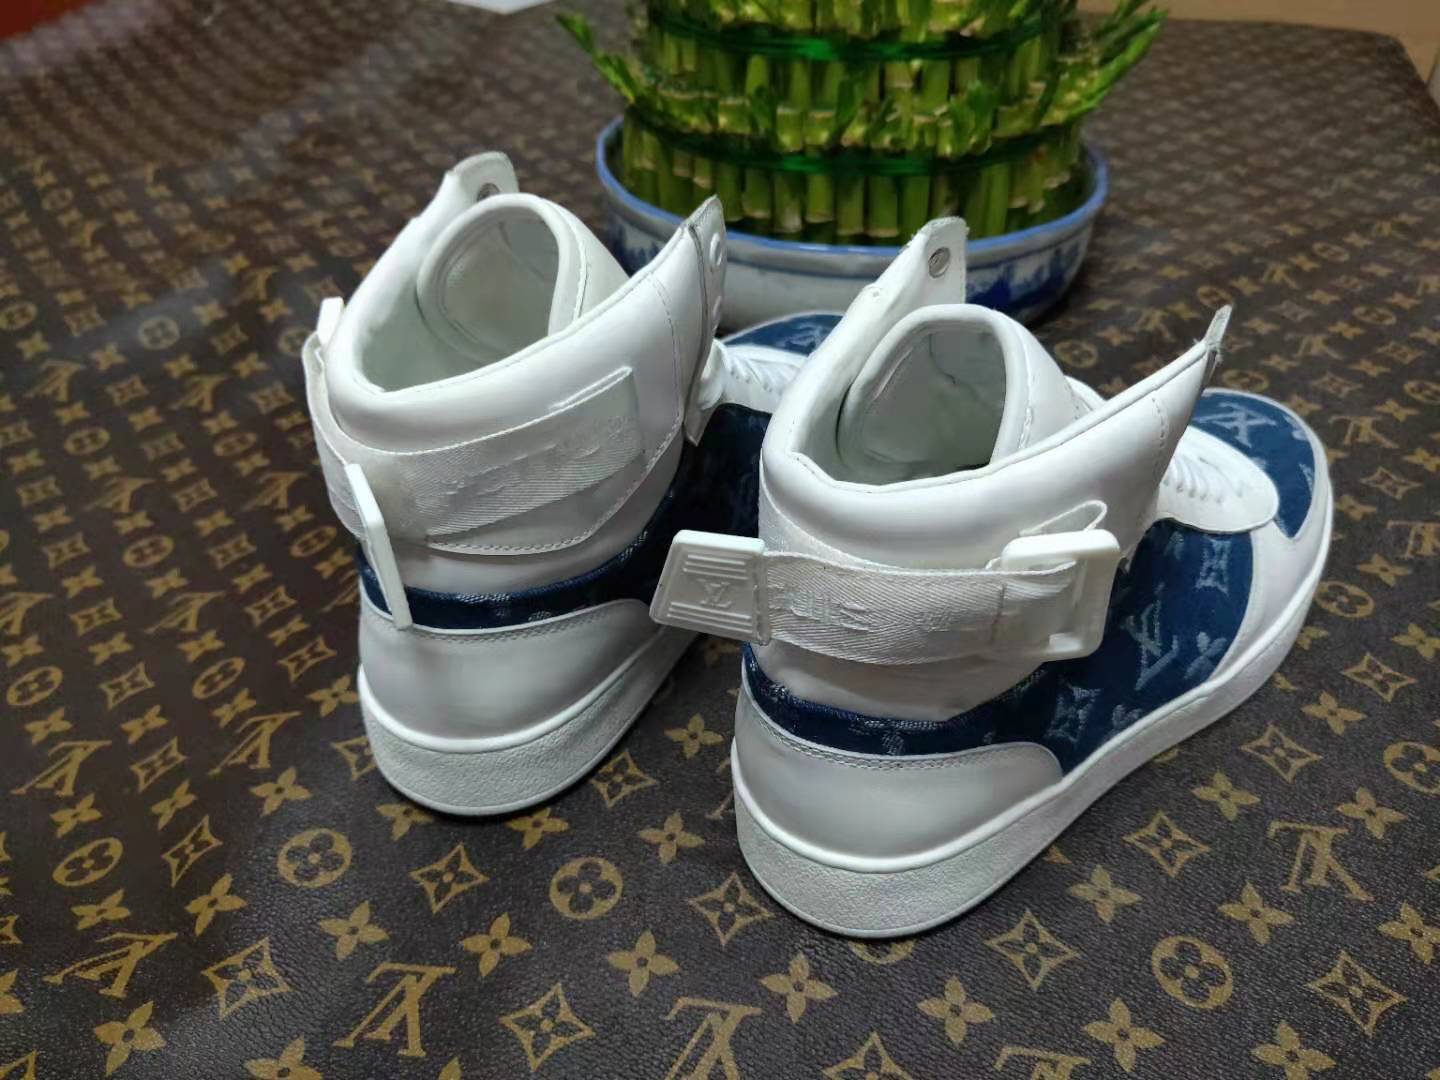 VO - LUV Rivoli White Blue Sneaker